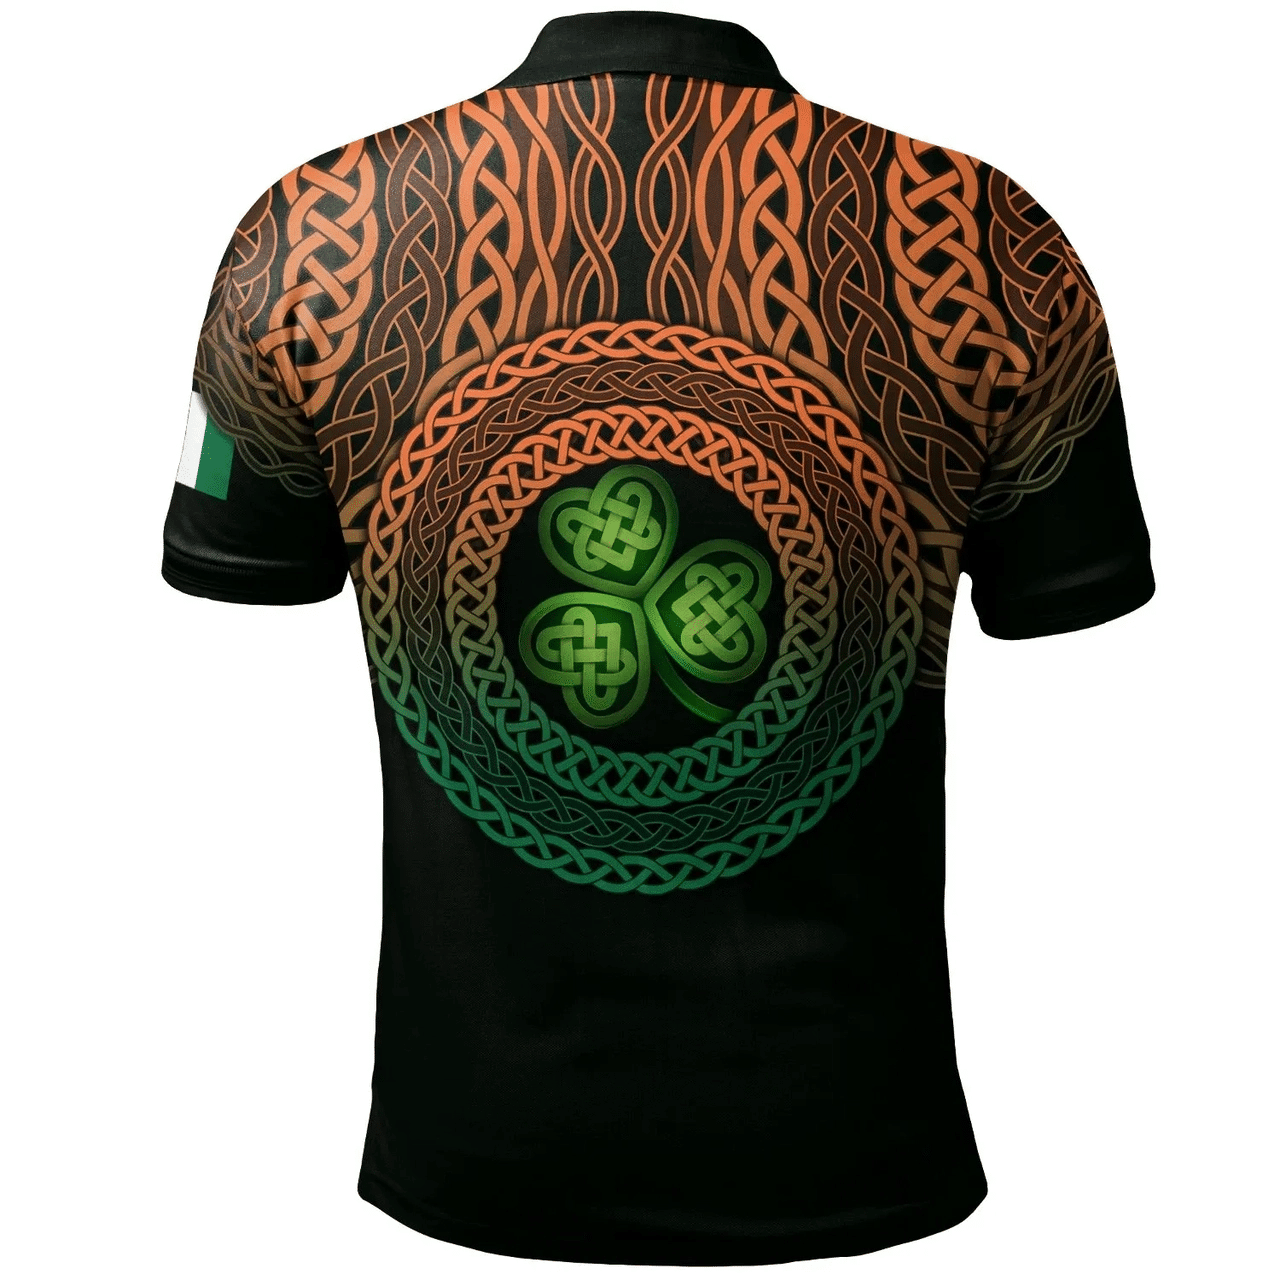 1stIreland Ireland Polo Shirt - Gillen or O'Gillen Irish Family Crest Polo Shirt - Celtic Pride A7 | 1stIreland.com